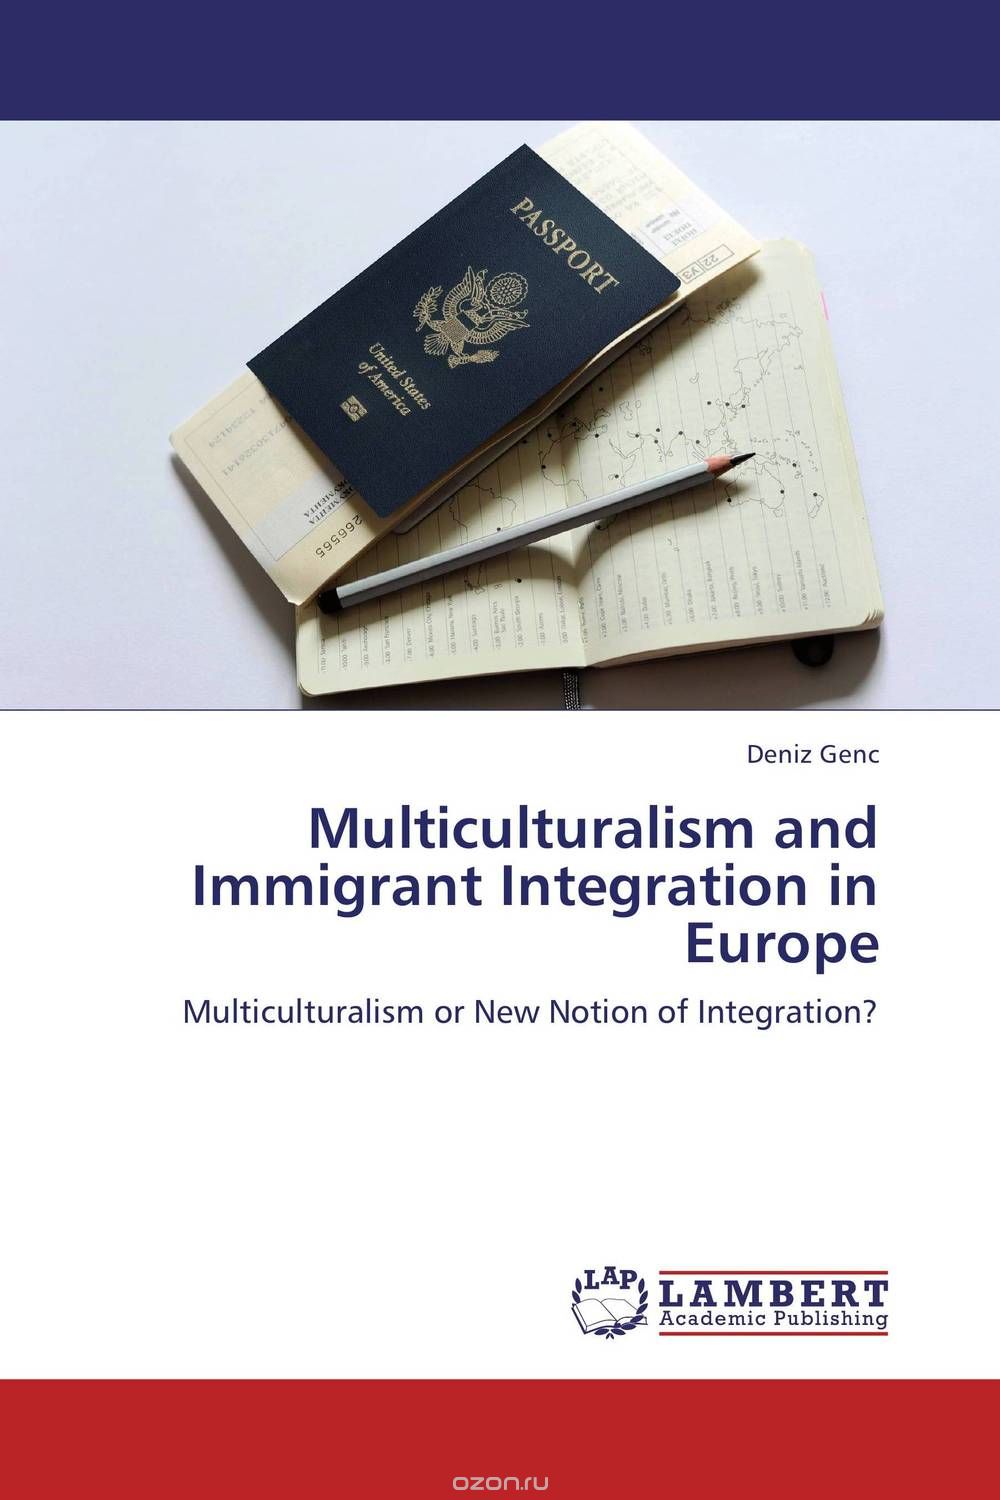 Скачать книгу "Multiculturalism and Immigrant Integration in Europe"